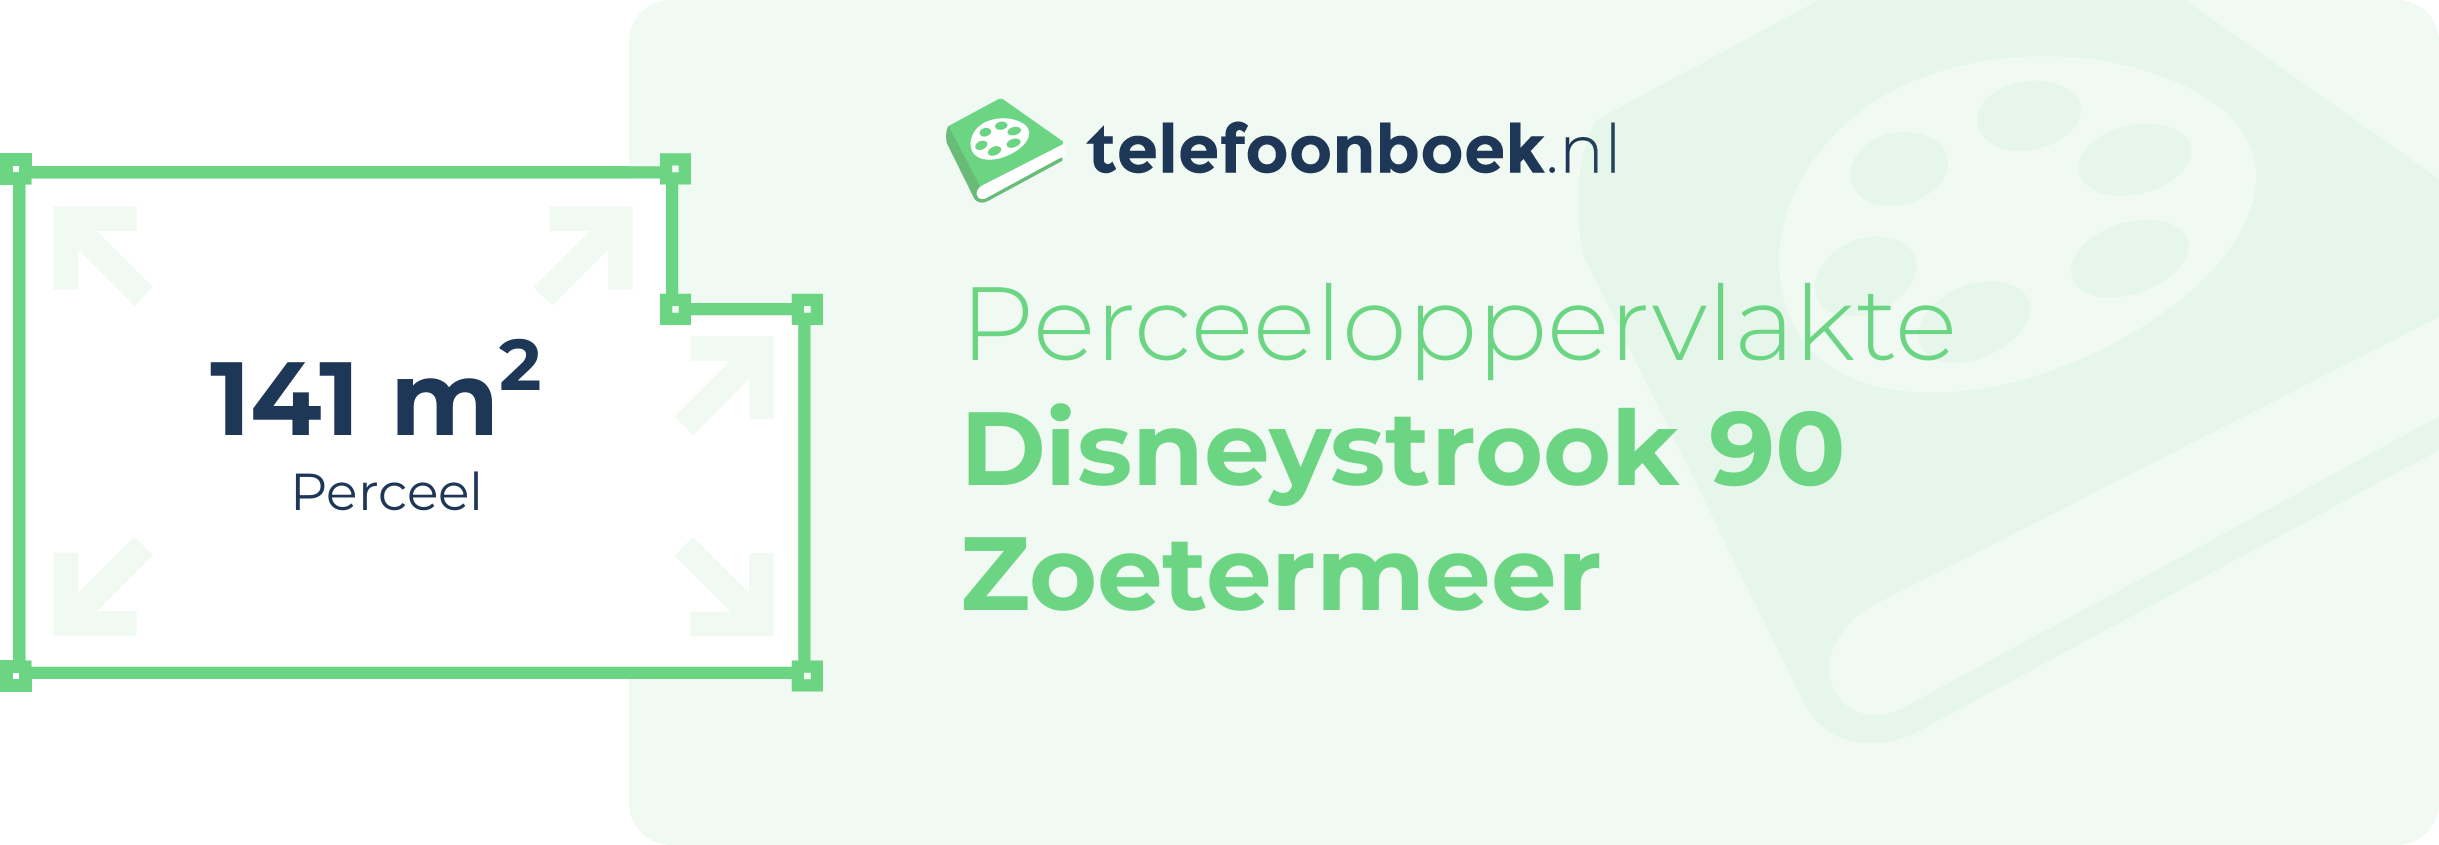 Perceeloppervlakte Disneystrook 90 Zoetermeer